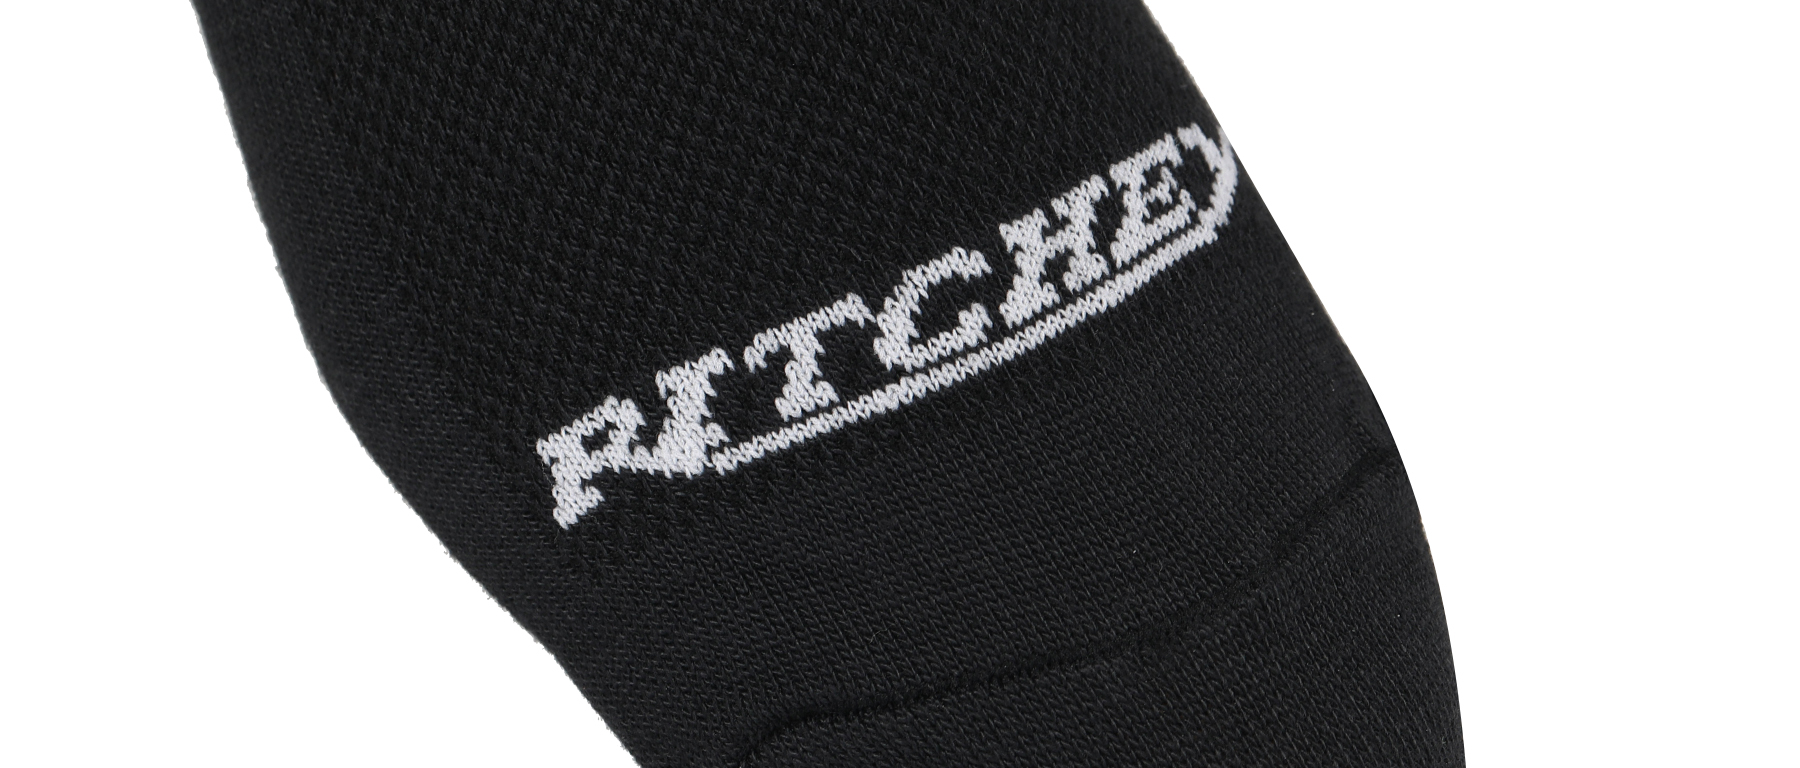 Ritchey Aireator Socks